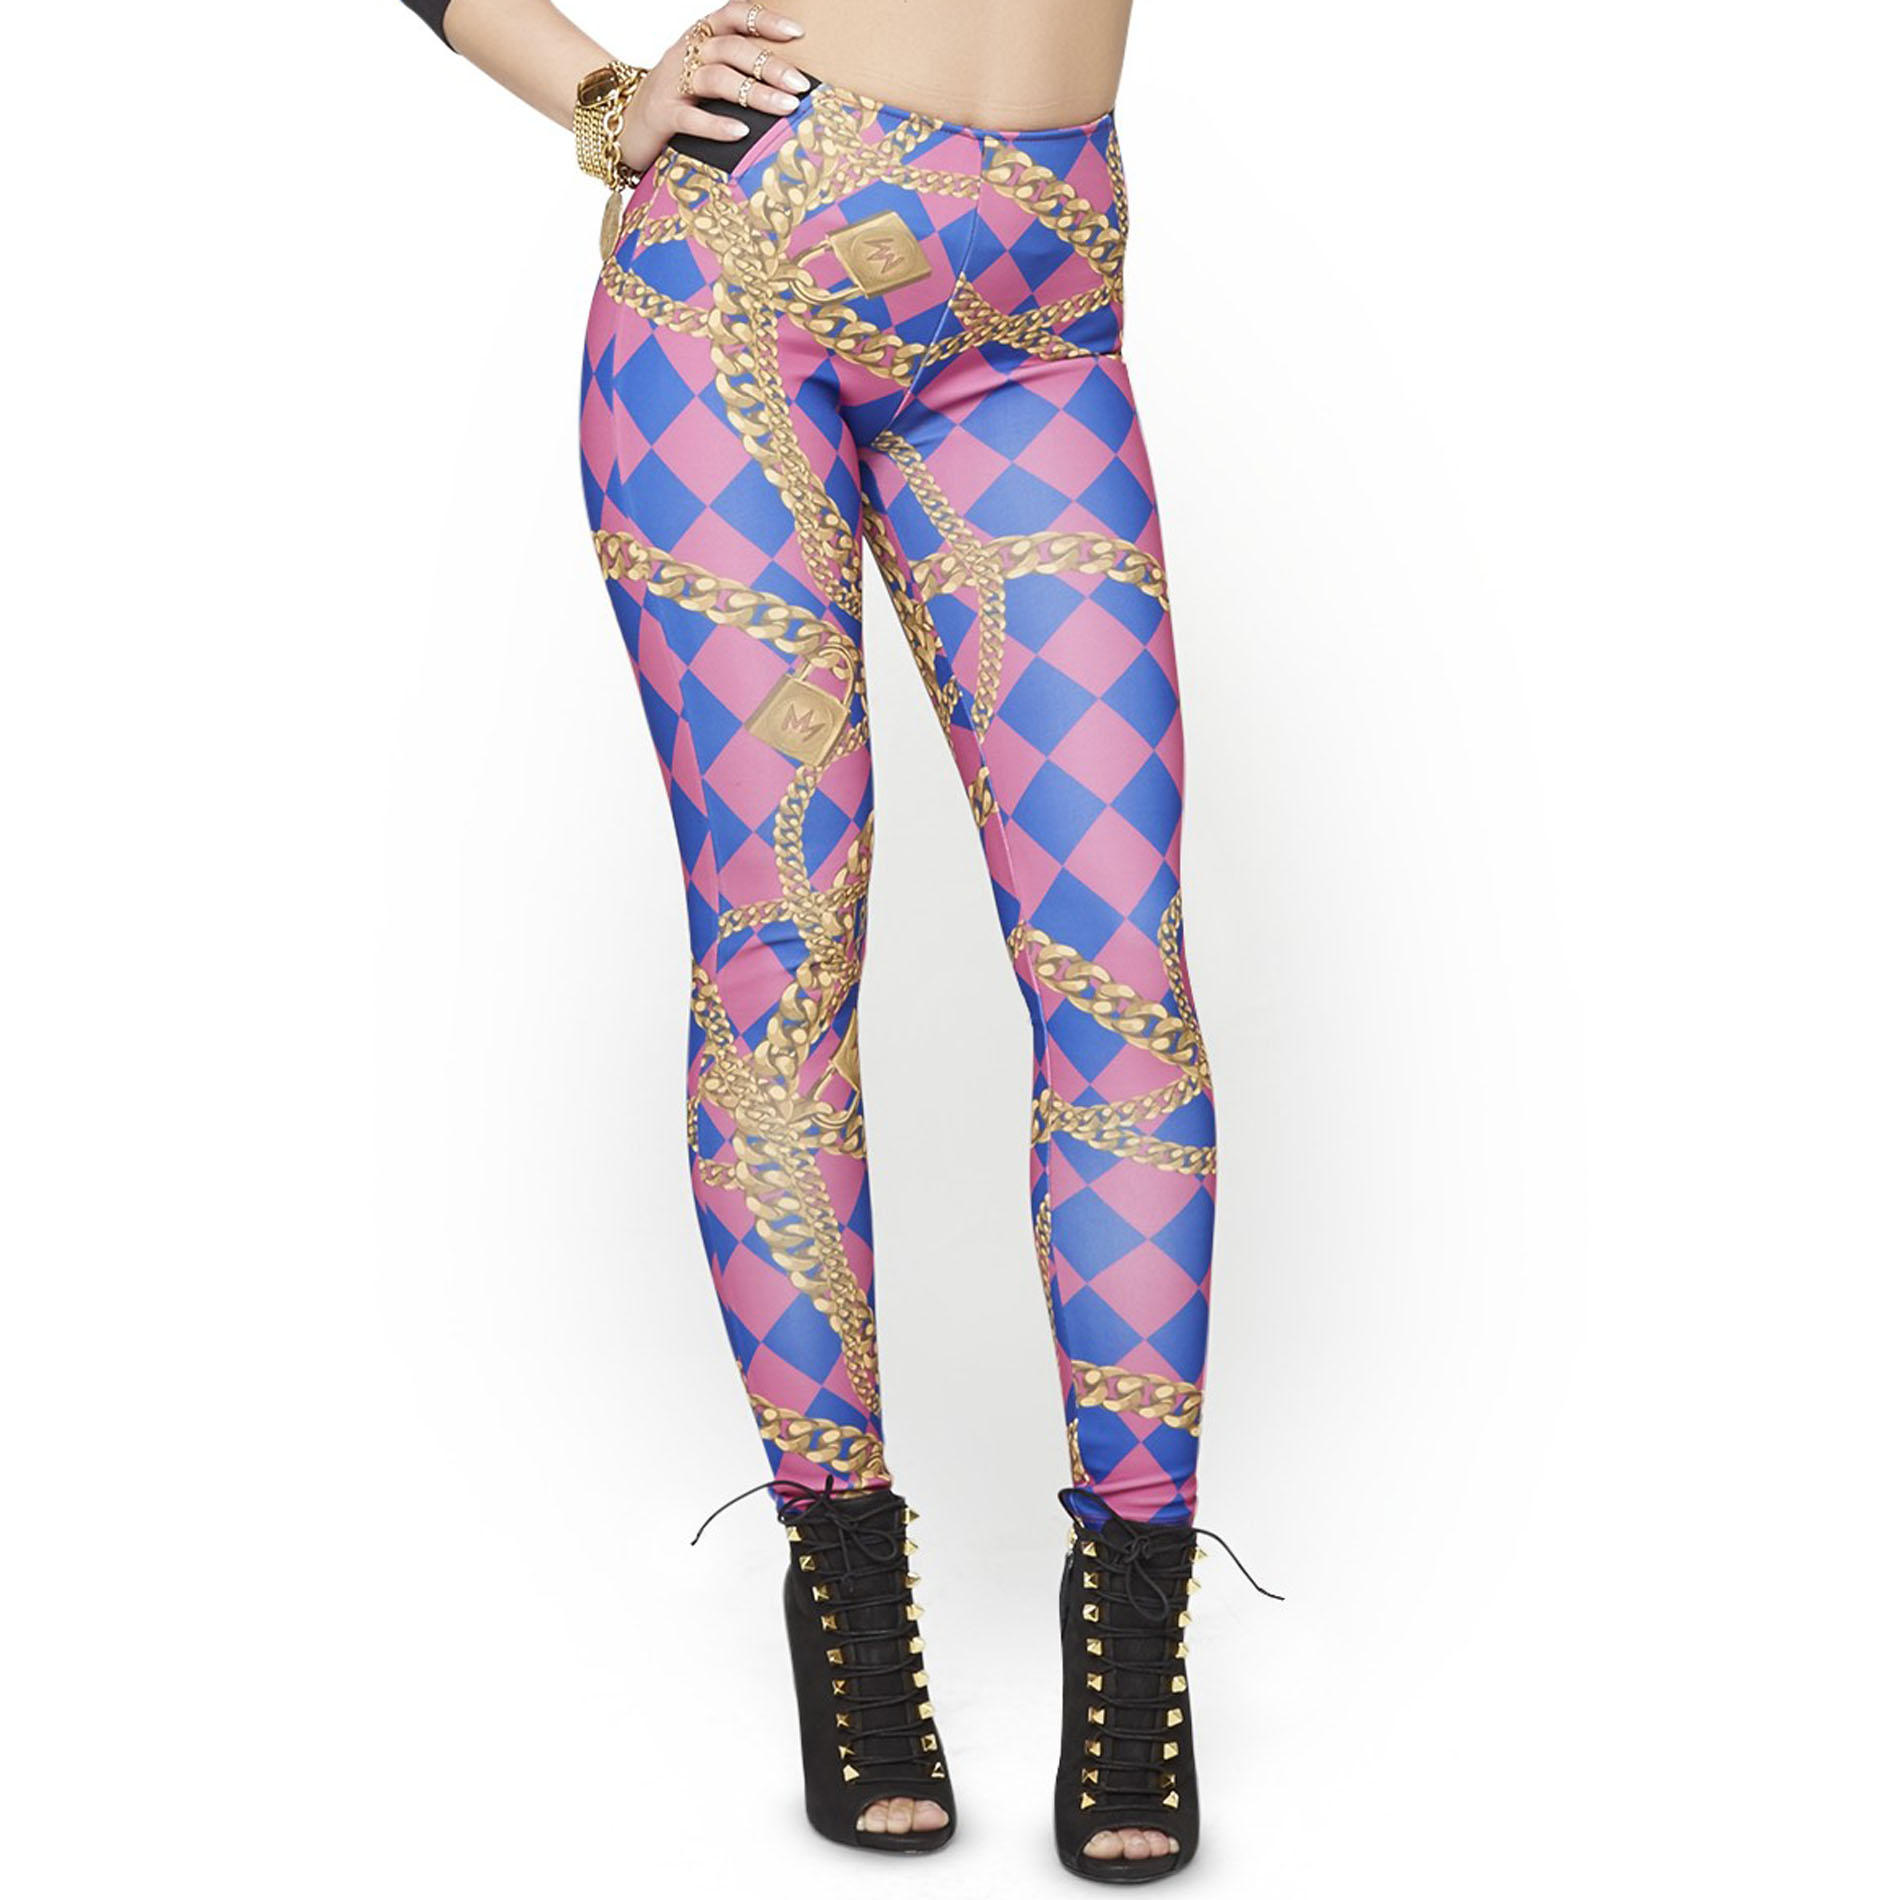 Nicki Minaj Women's Gored Leggings - Harlequin Chain Print